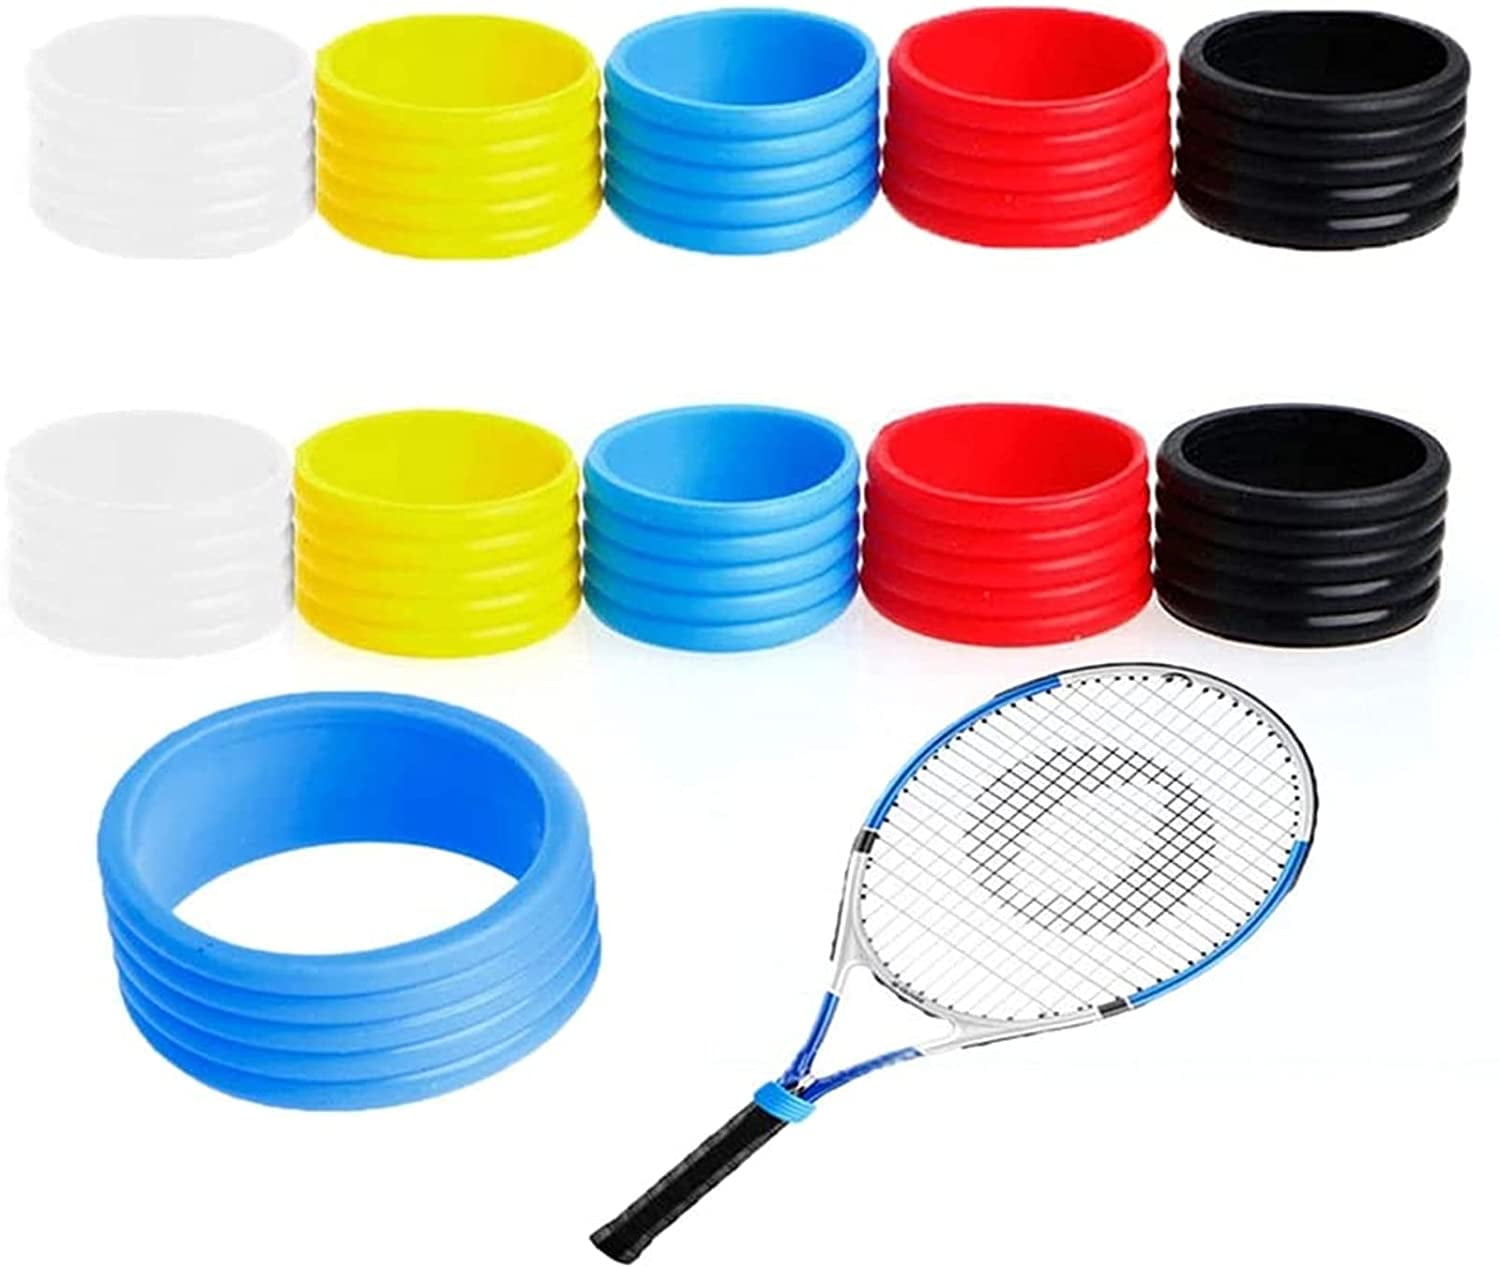 5x Black Anti-slip Racket Over Grips Bat Tennis Badminton Squash Tape Grips 